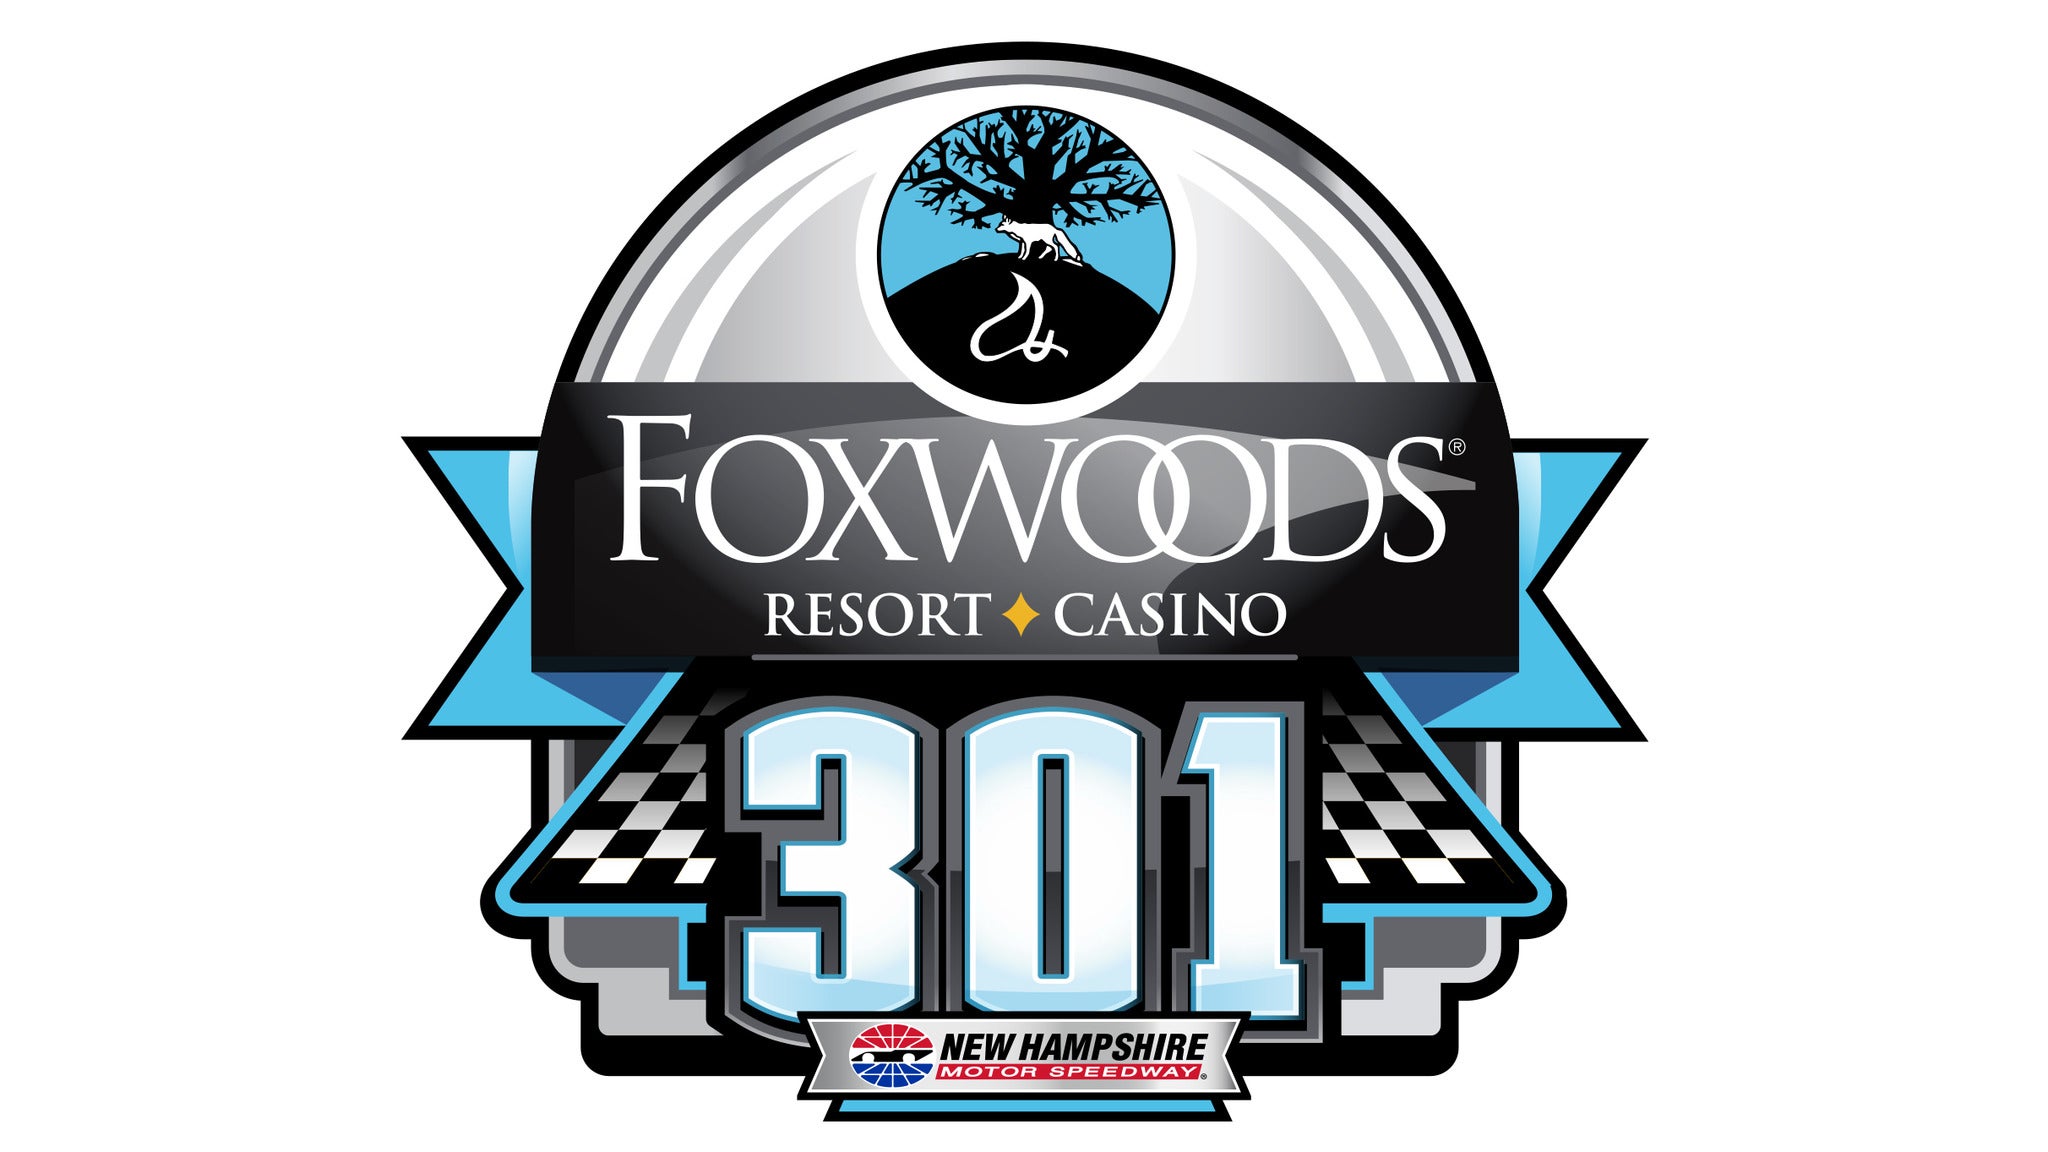 Foxwoods Resort Casino 301 presale information on freepresalepasswords.com